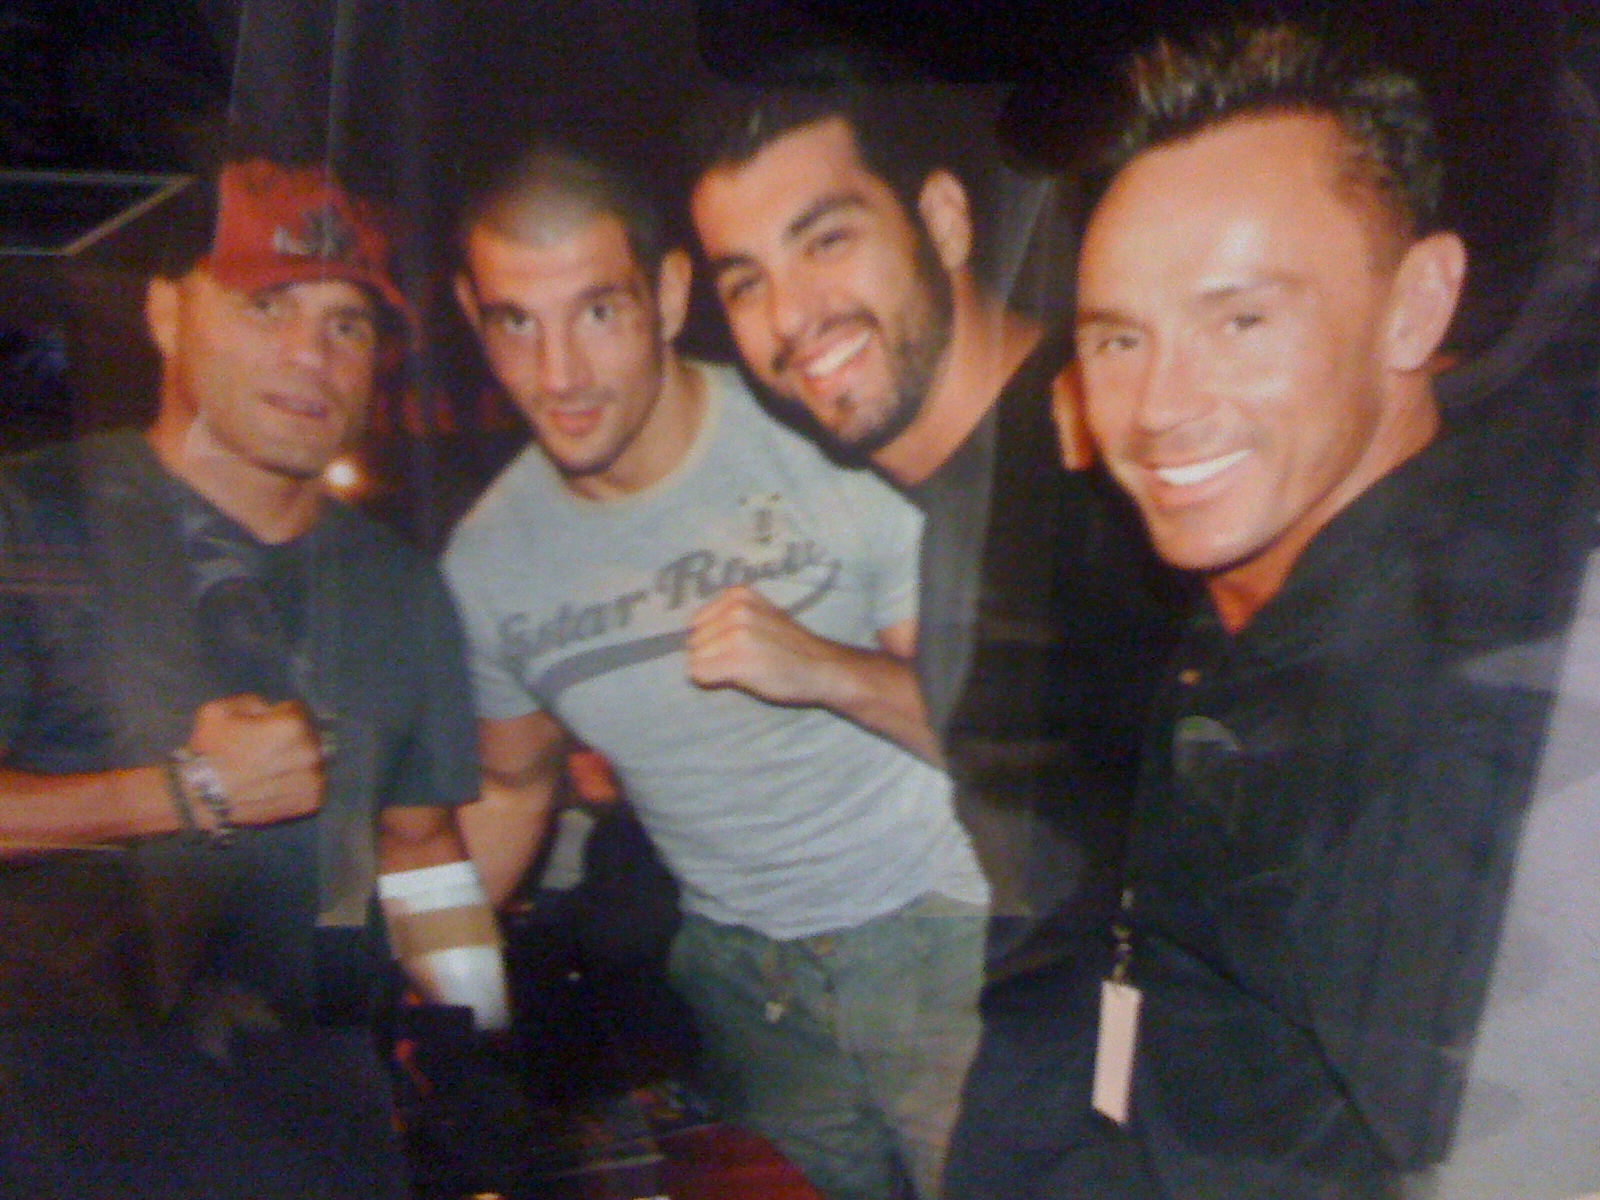 OG with UFC fighters